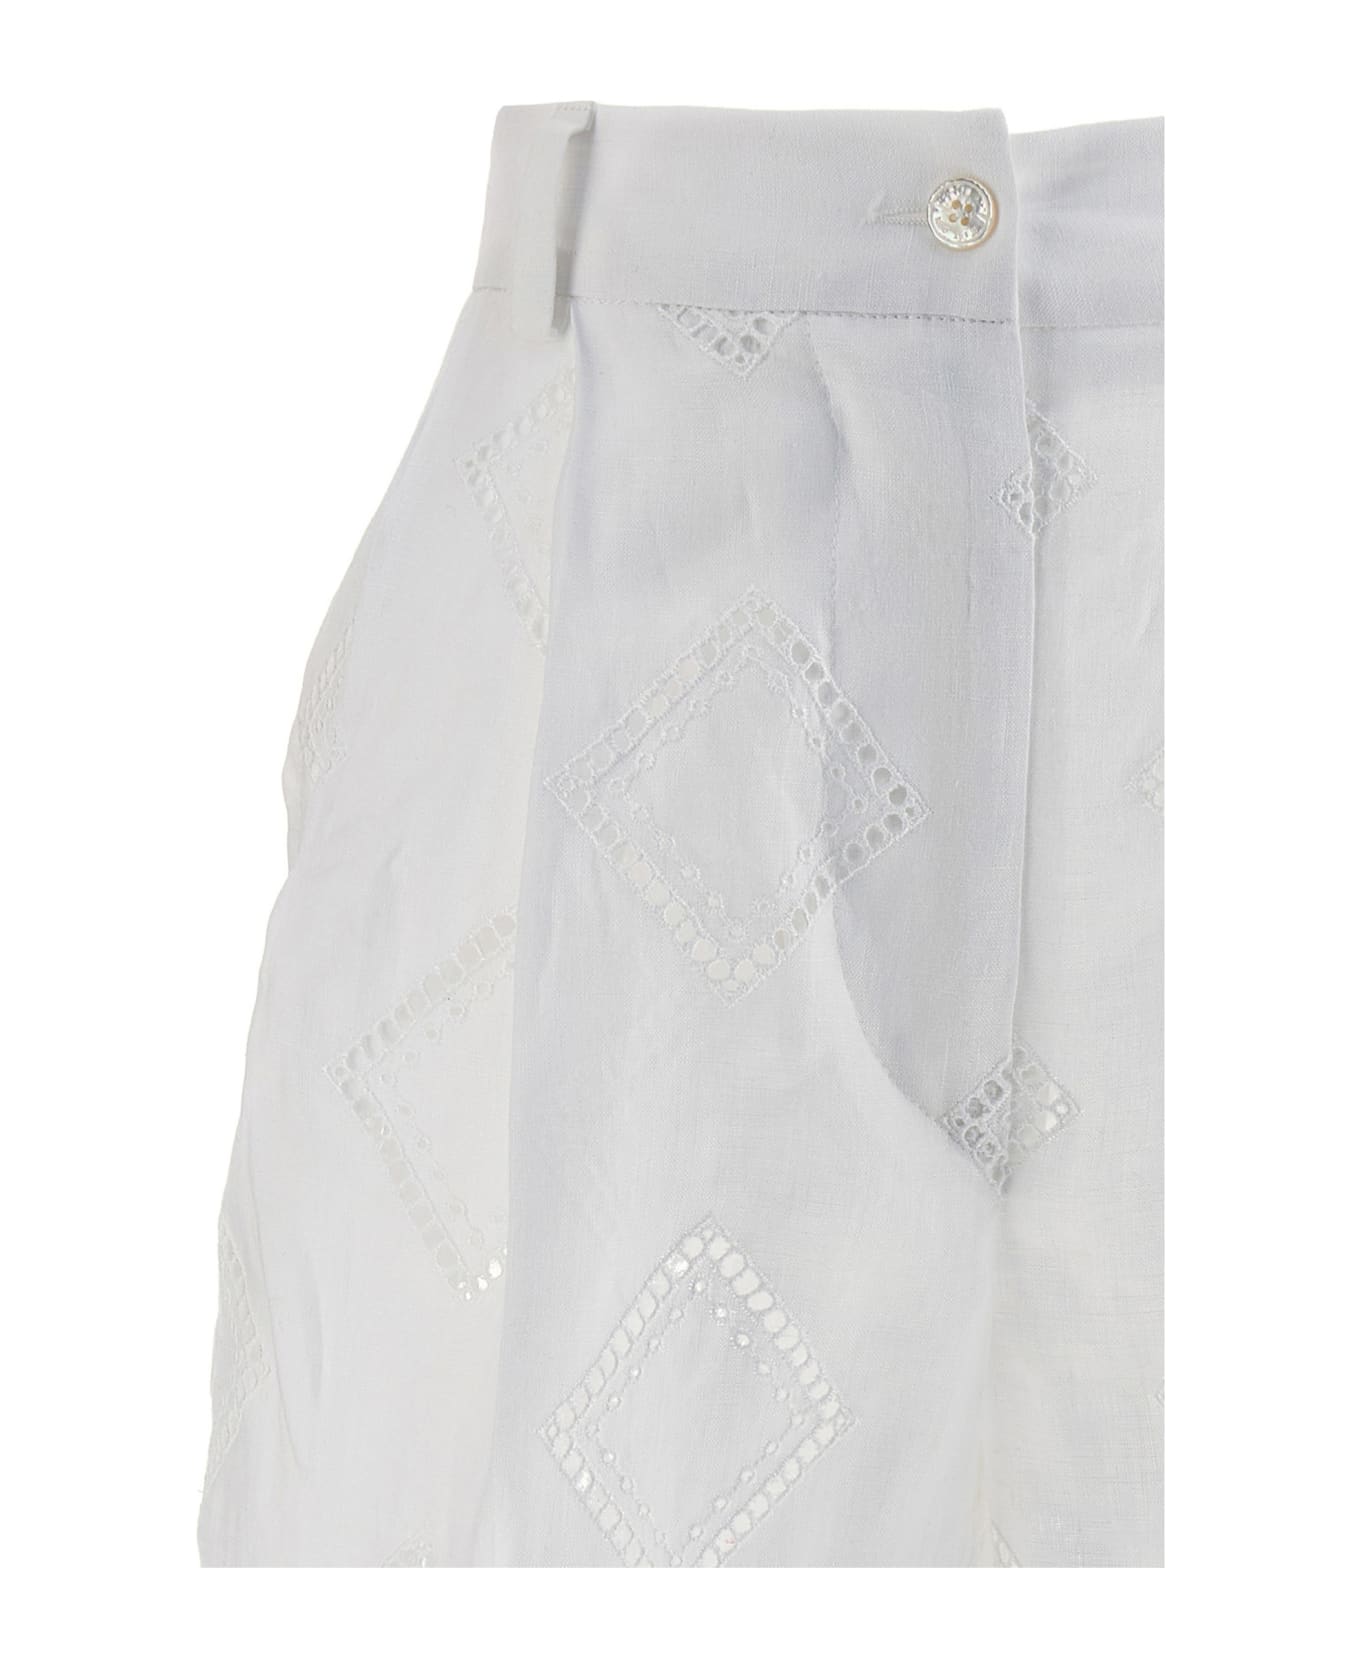 Kiton Embroidered Linen Bermuda Shorts - White